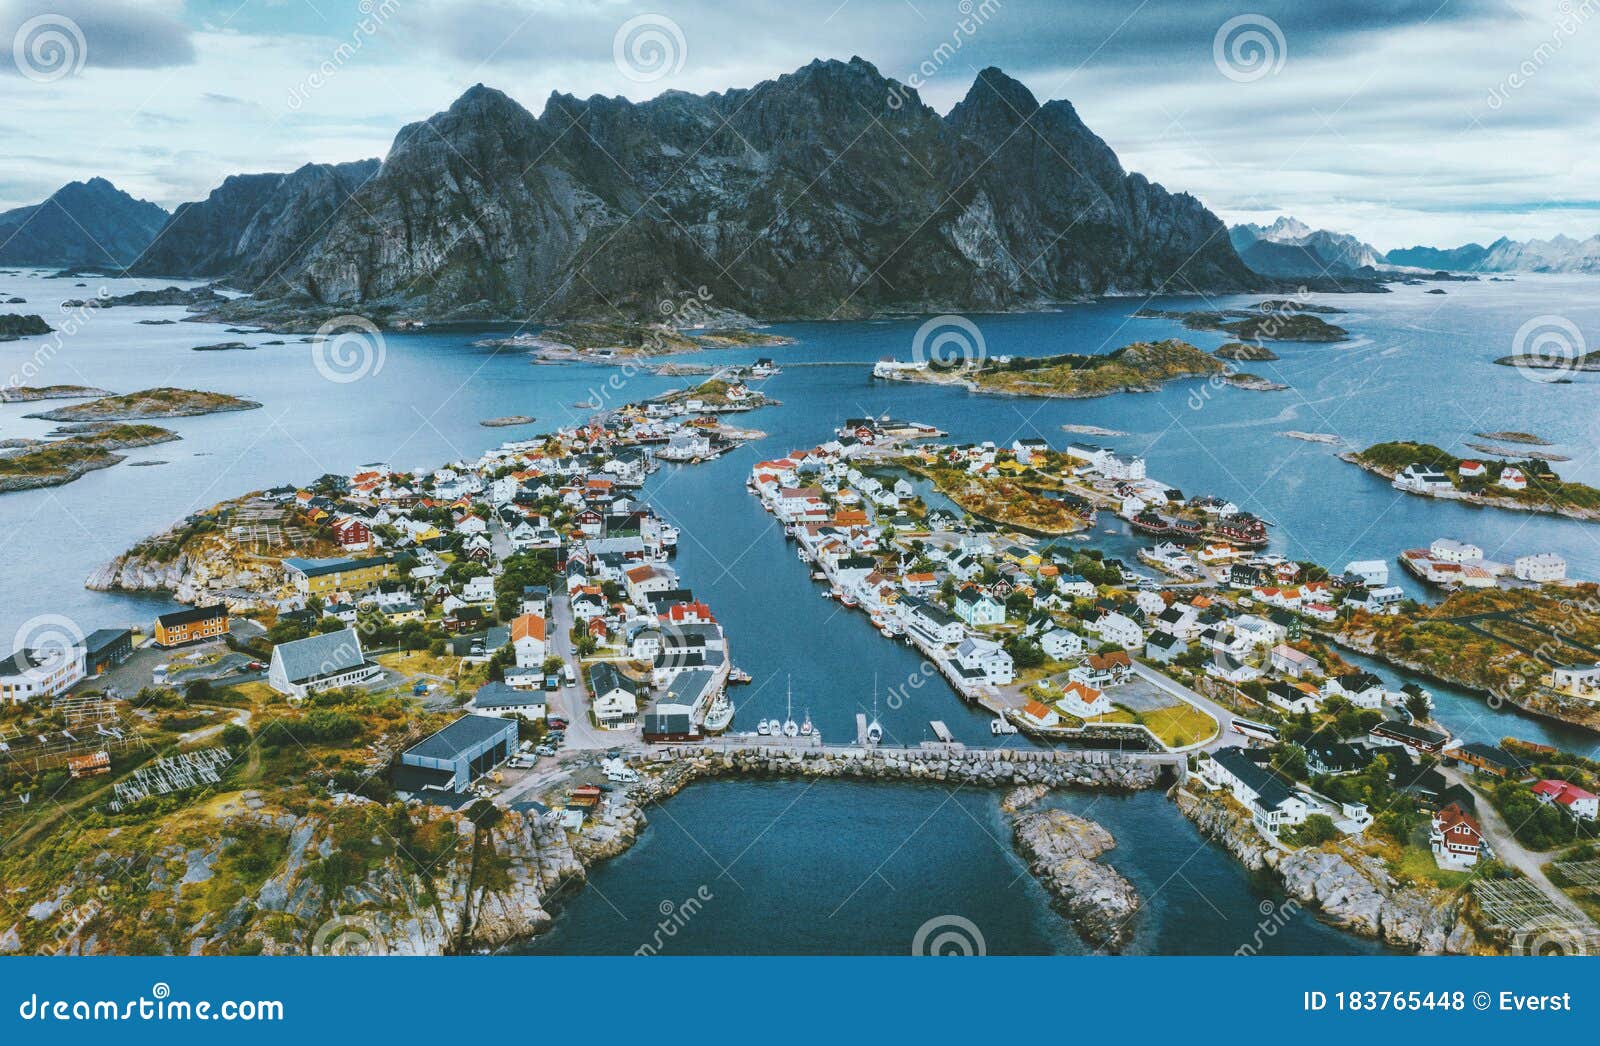 aerial view of henningsvaer village in norway lofoten islands famous travel destinations